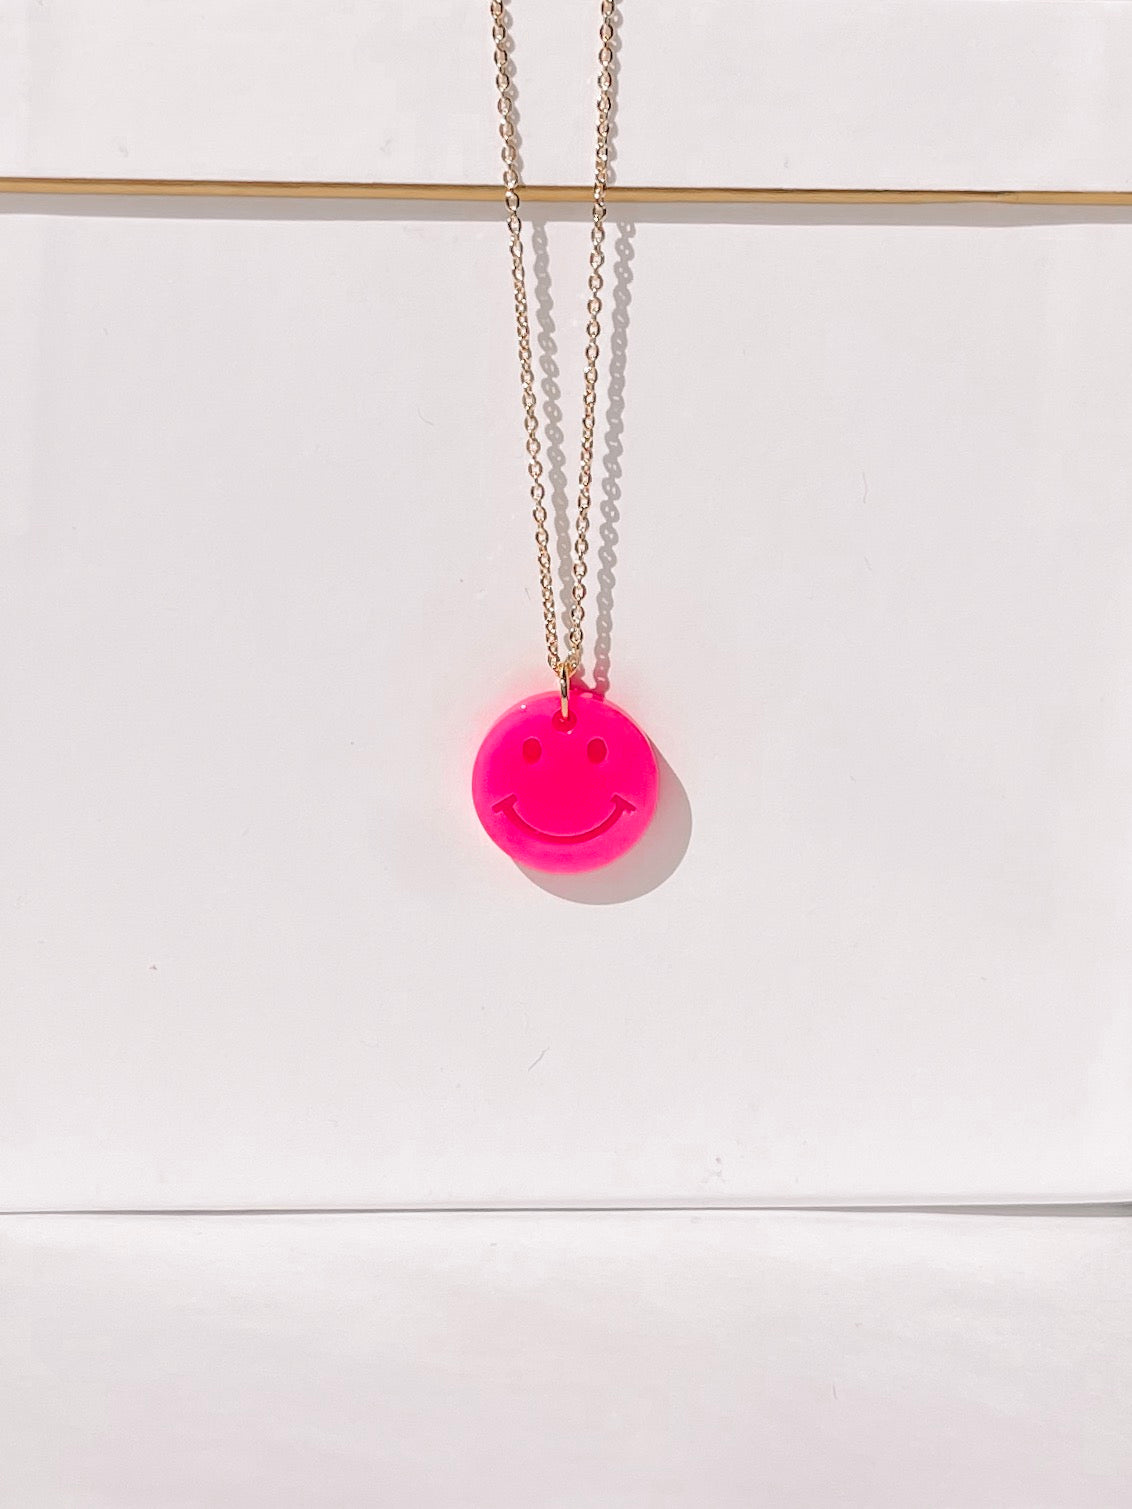 Sonic Smiles Hot Pink Necklace and Earrings | Sassy Shortcake Boutique | sassyshortcake.com